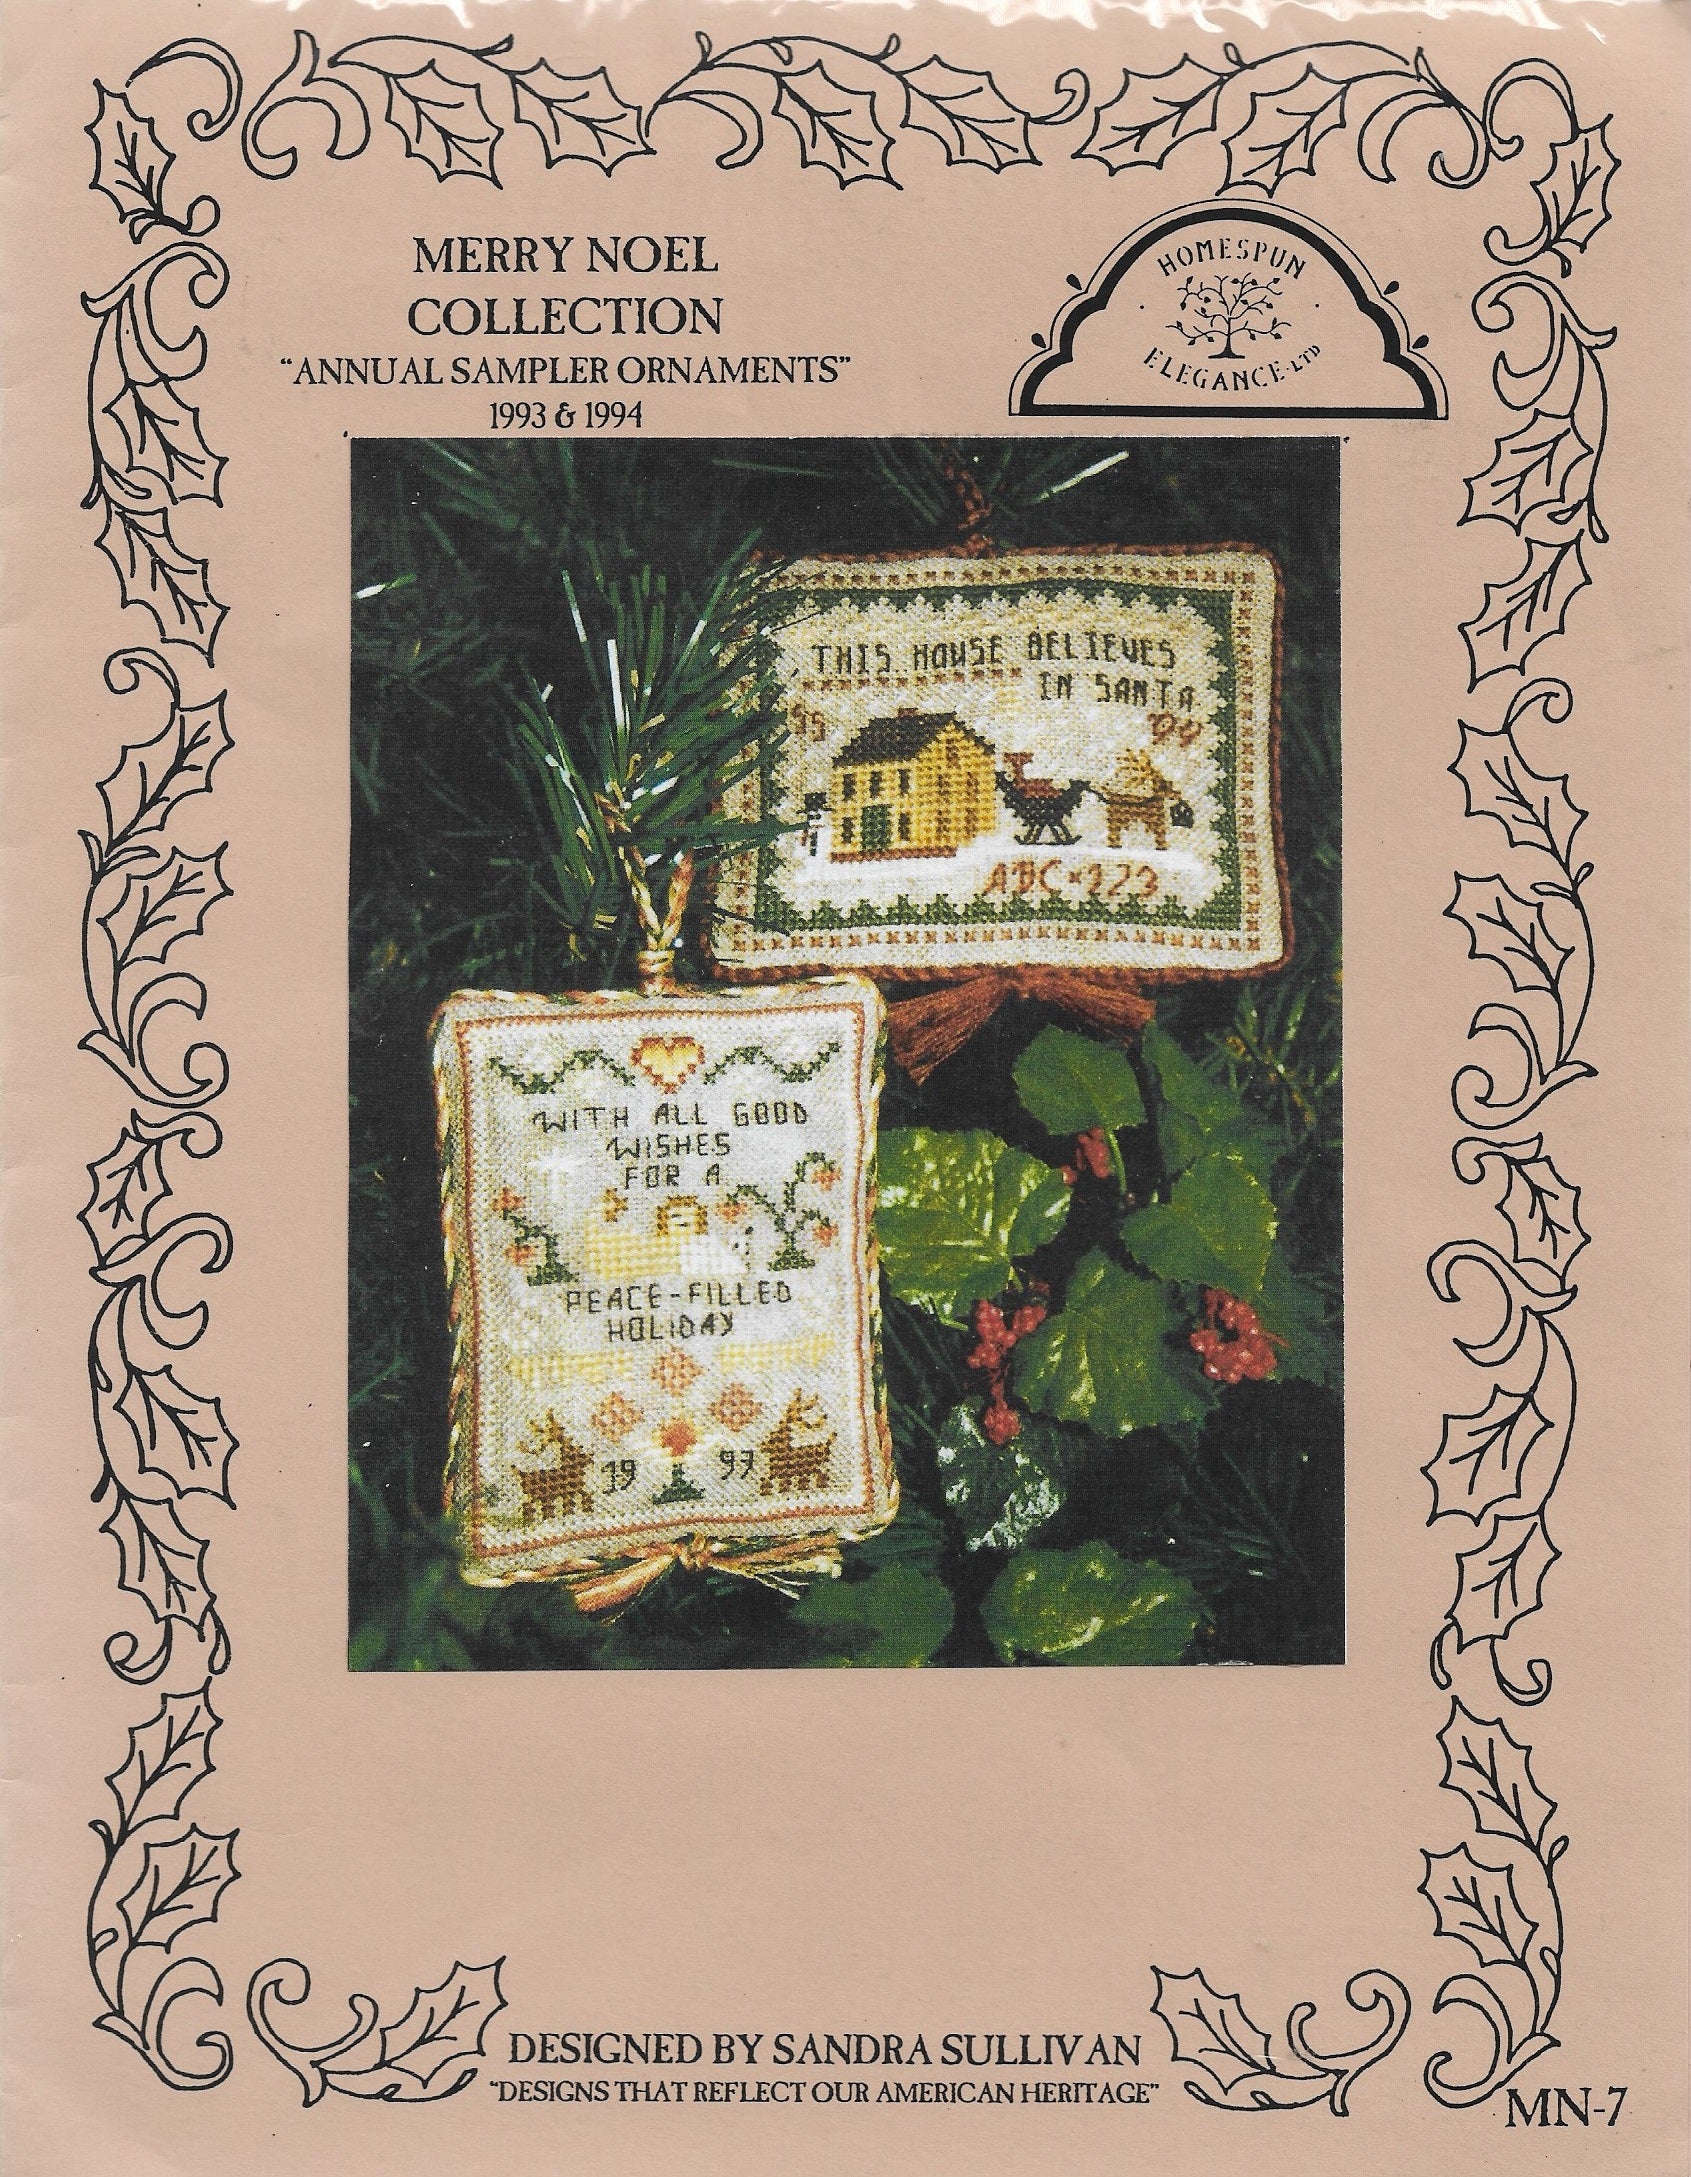 Homespun Elegance Annual Sampler Ornaments 1993/4 Merry Noel Collection cross stitch pattern